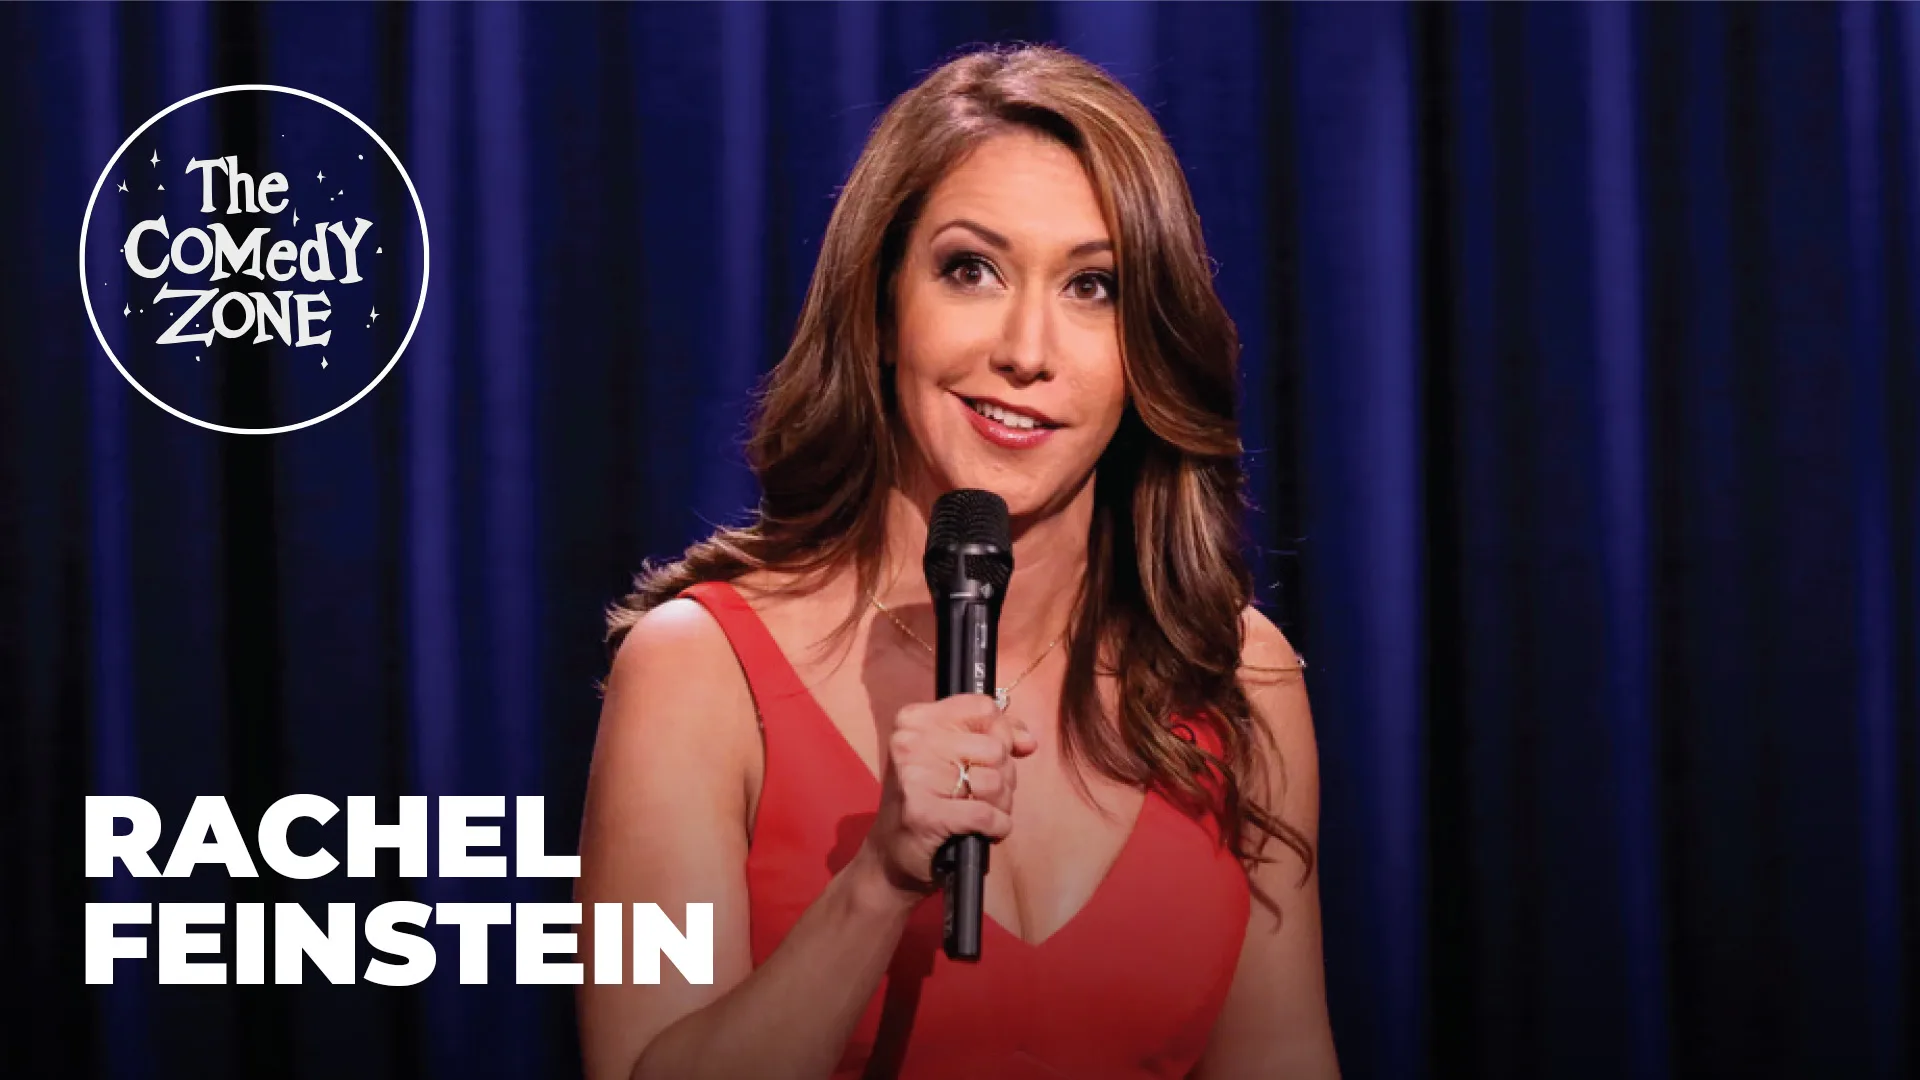 The Comedy Zone Rachel Feinstein Web Banner